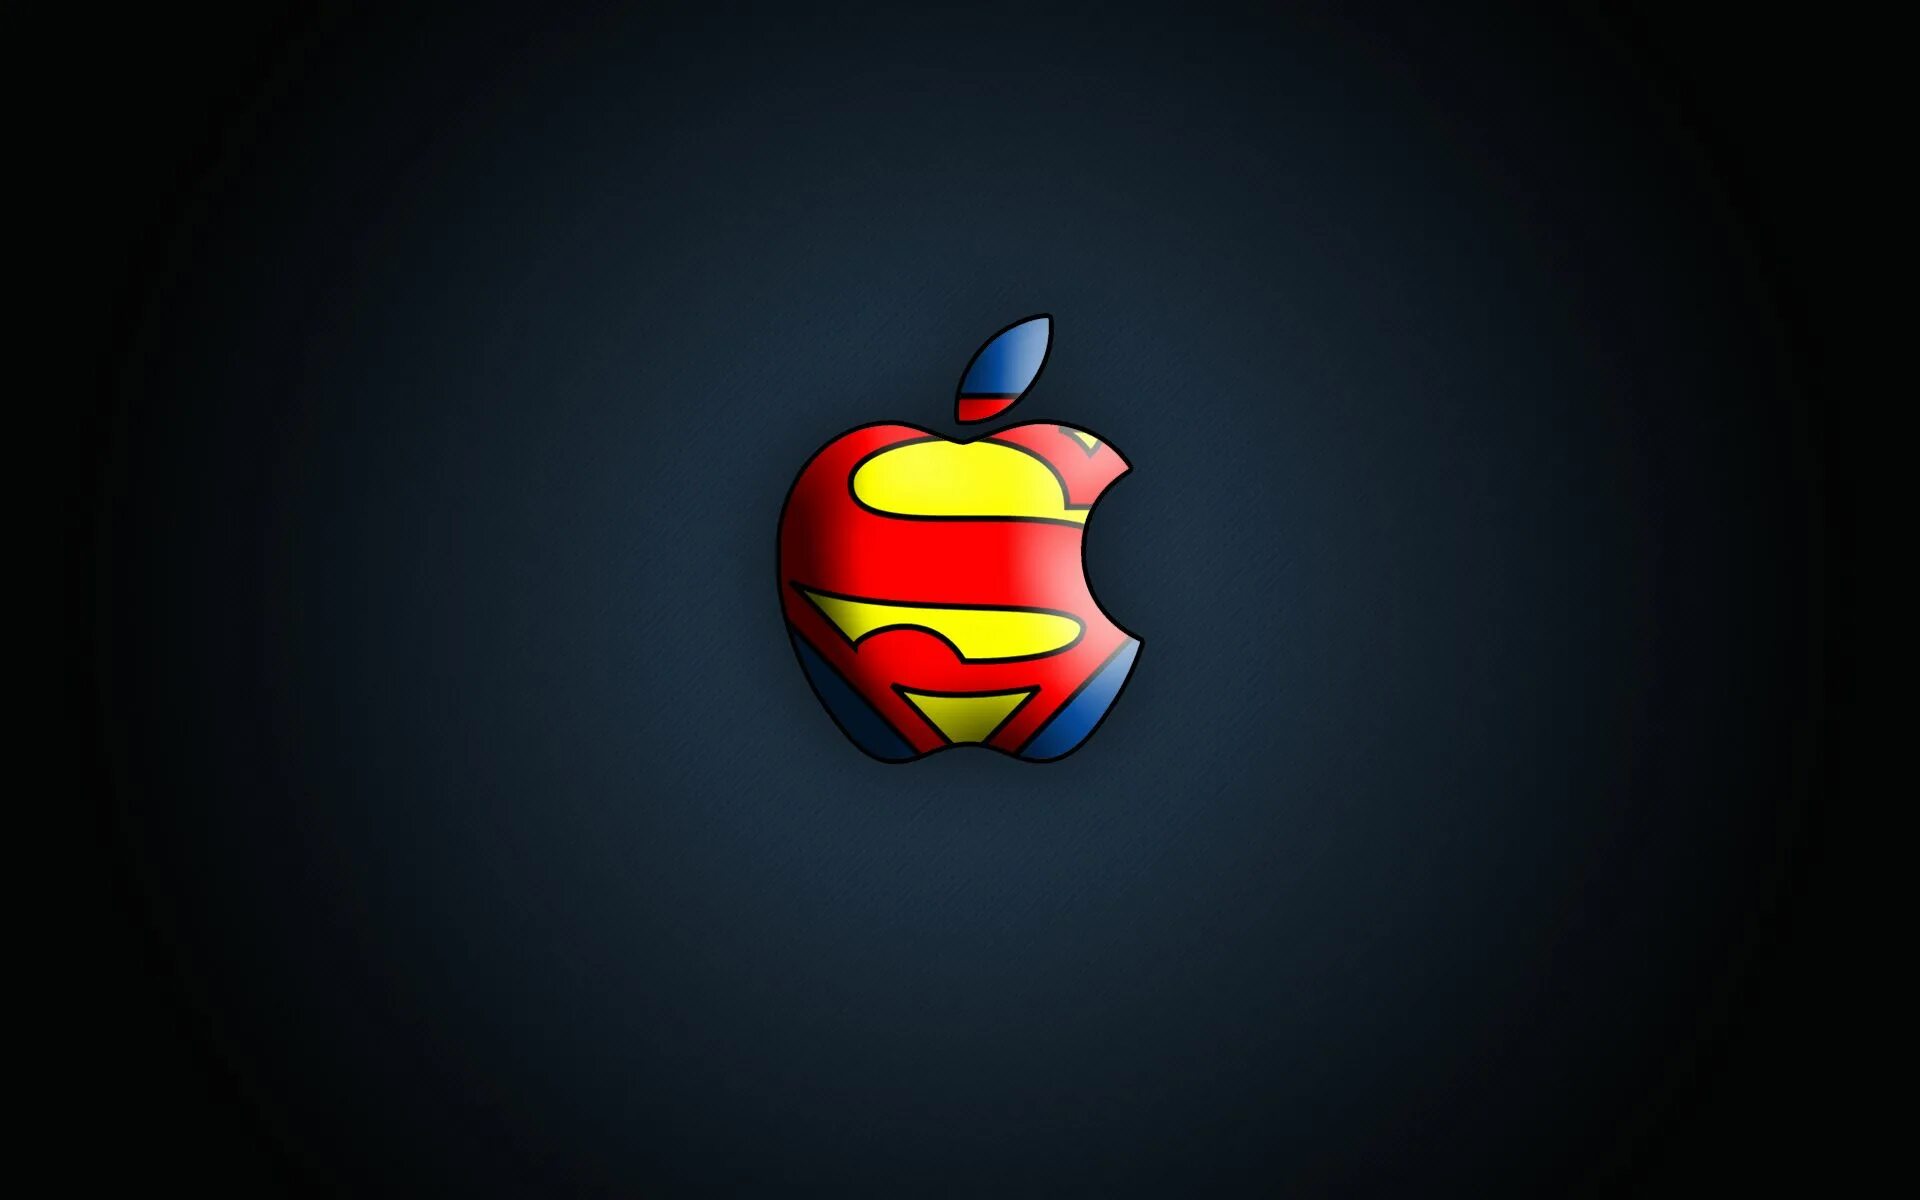 Обои на айфон plus. Обои Apple. Обои на айфон. Обои Apple iphone. Логотип Apple.